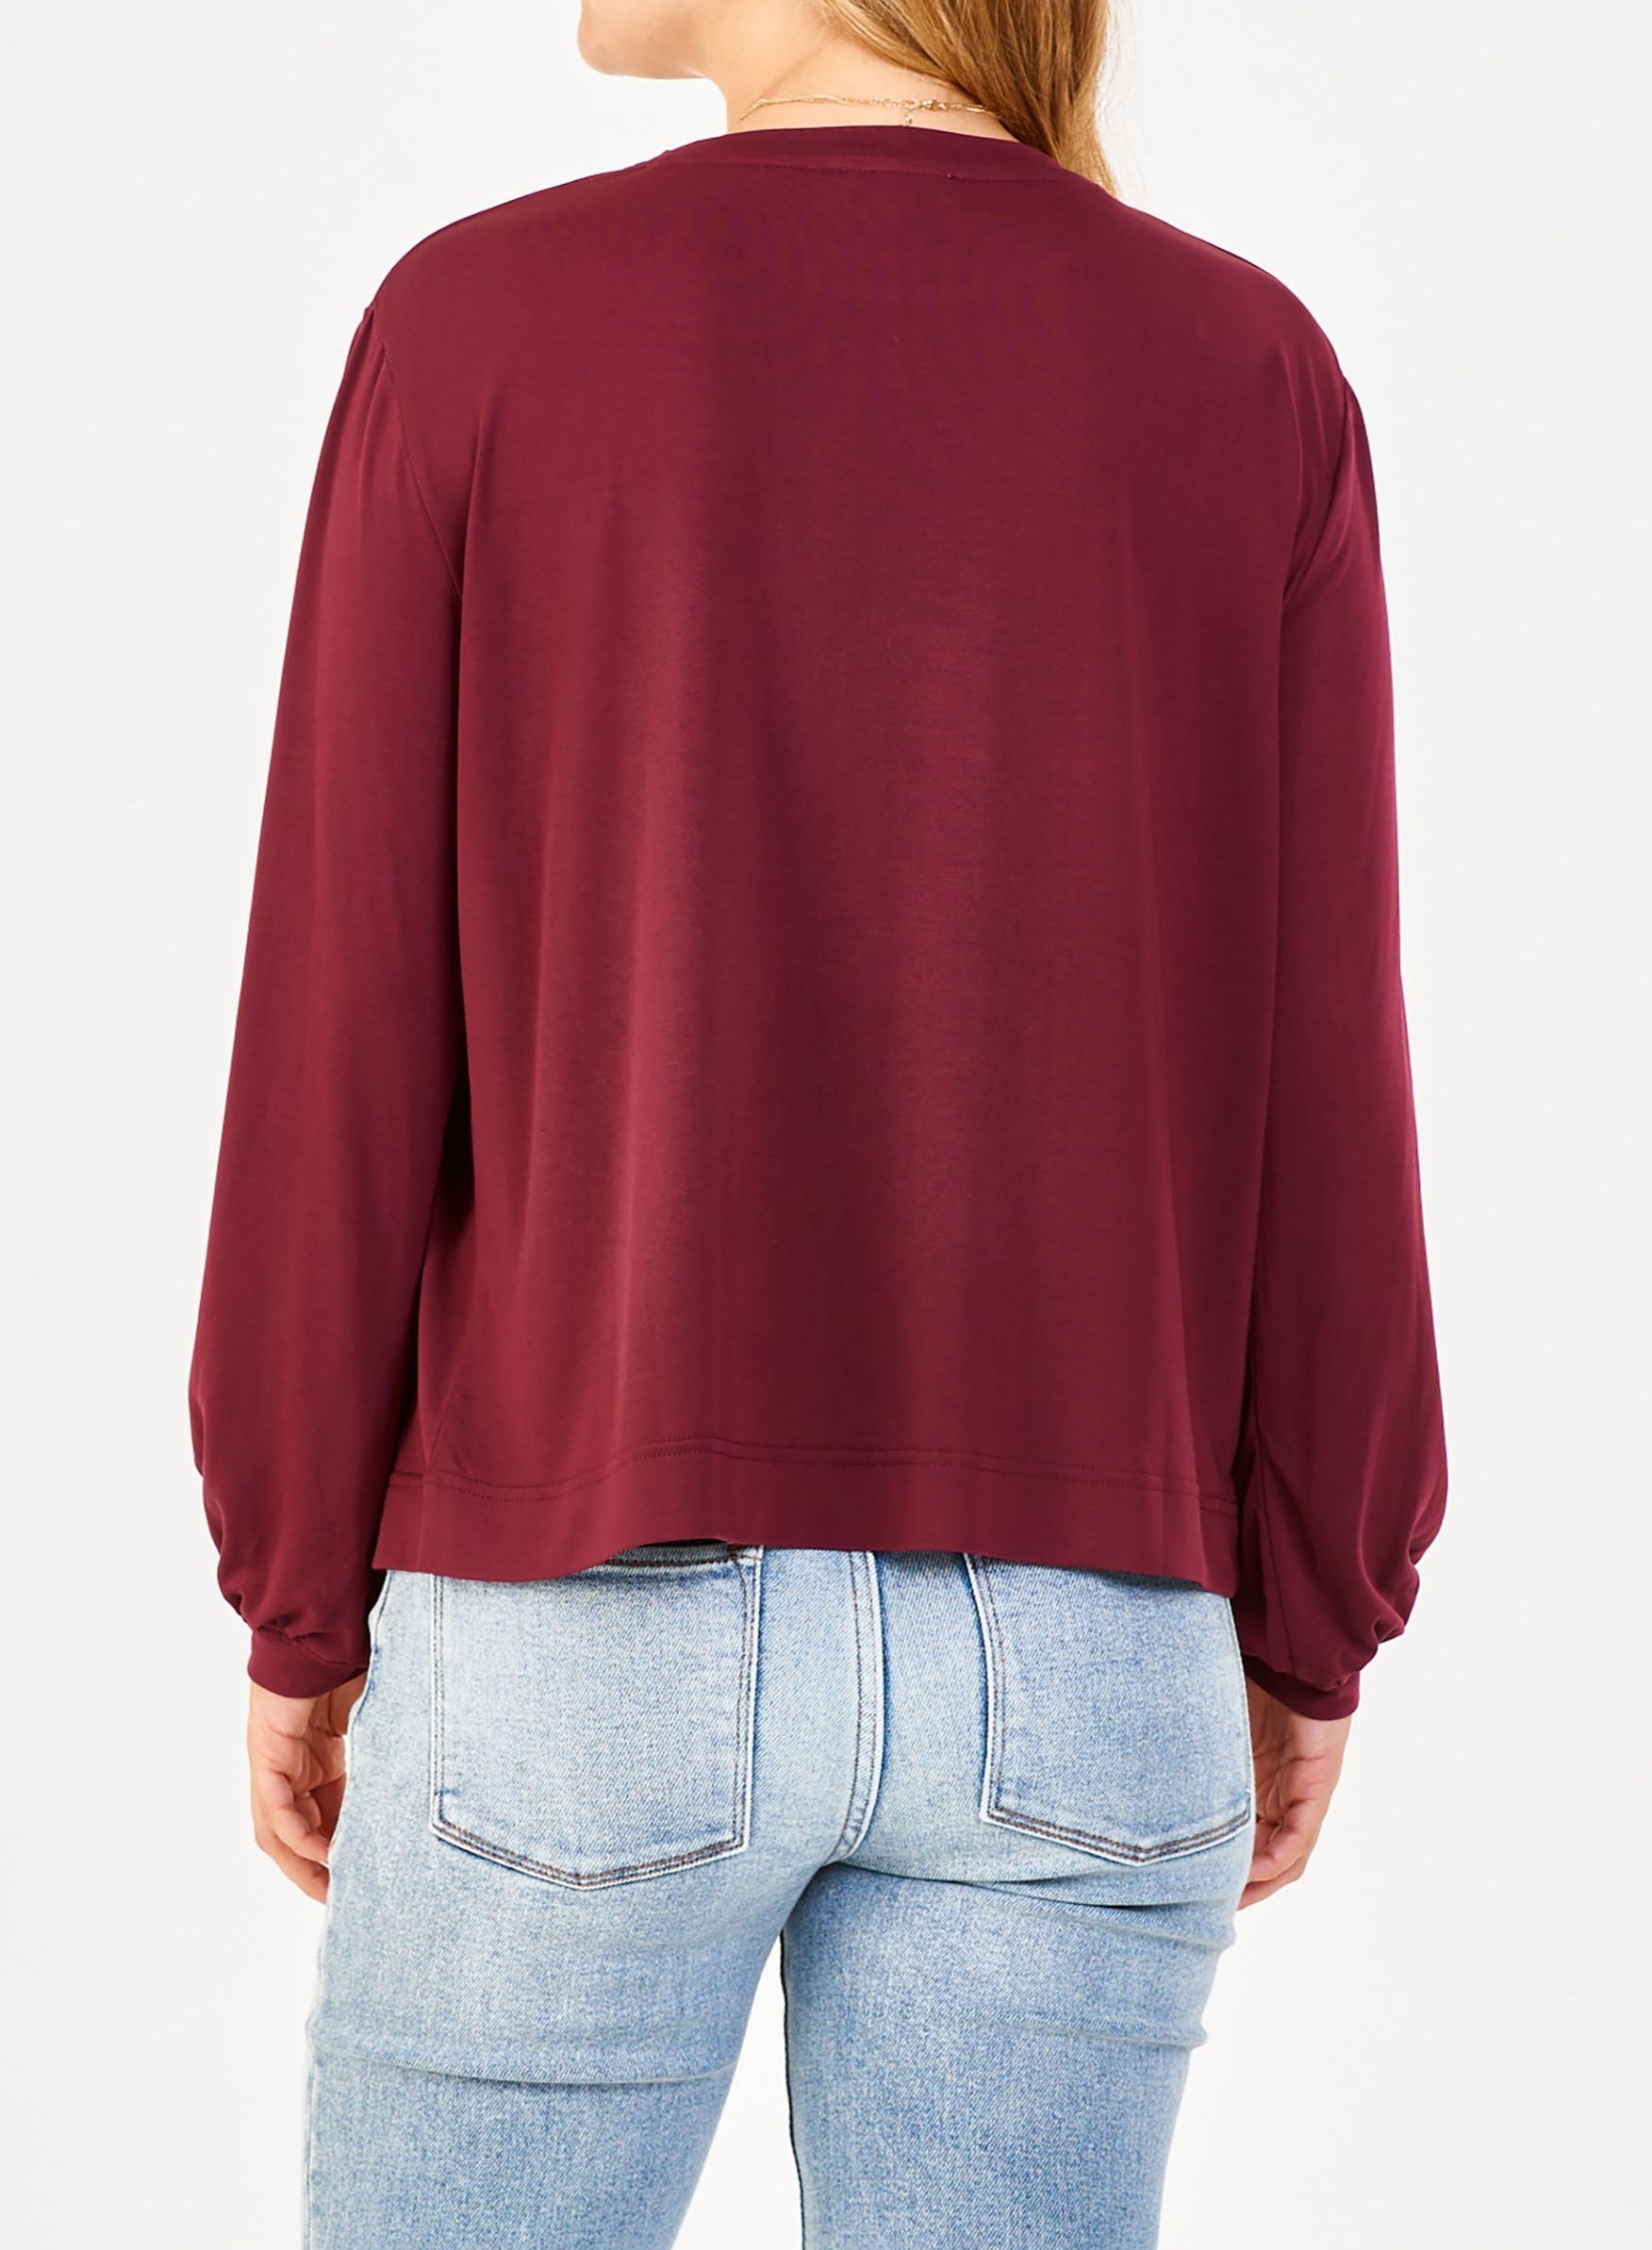 matilda-basic-long-sleeve-top-tawny-port-back-image-another-love-clothing